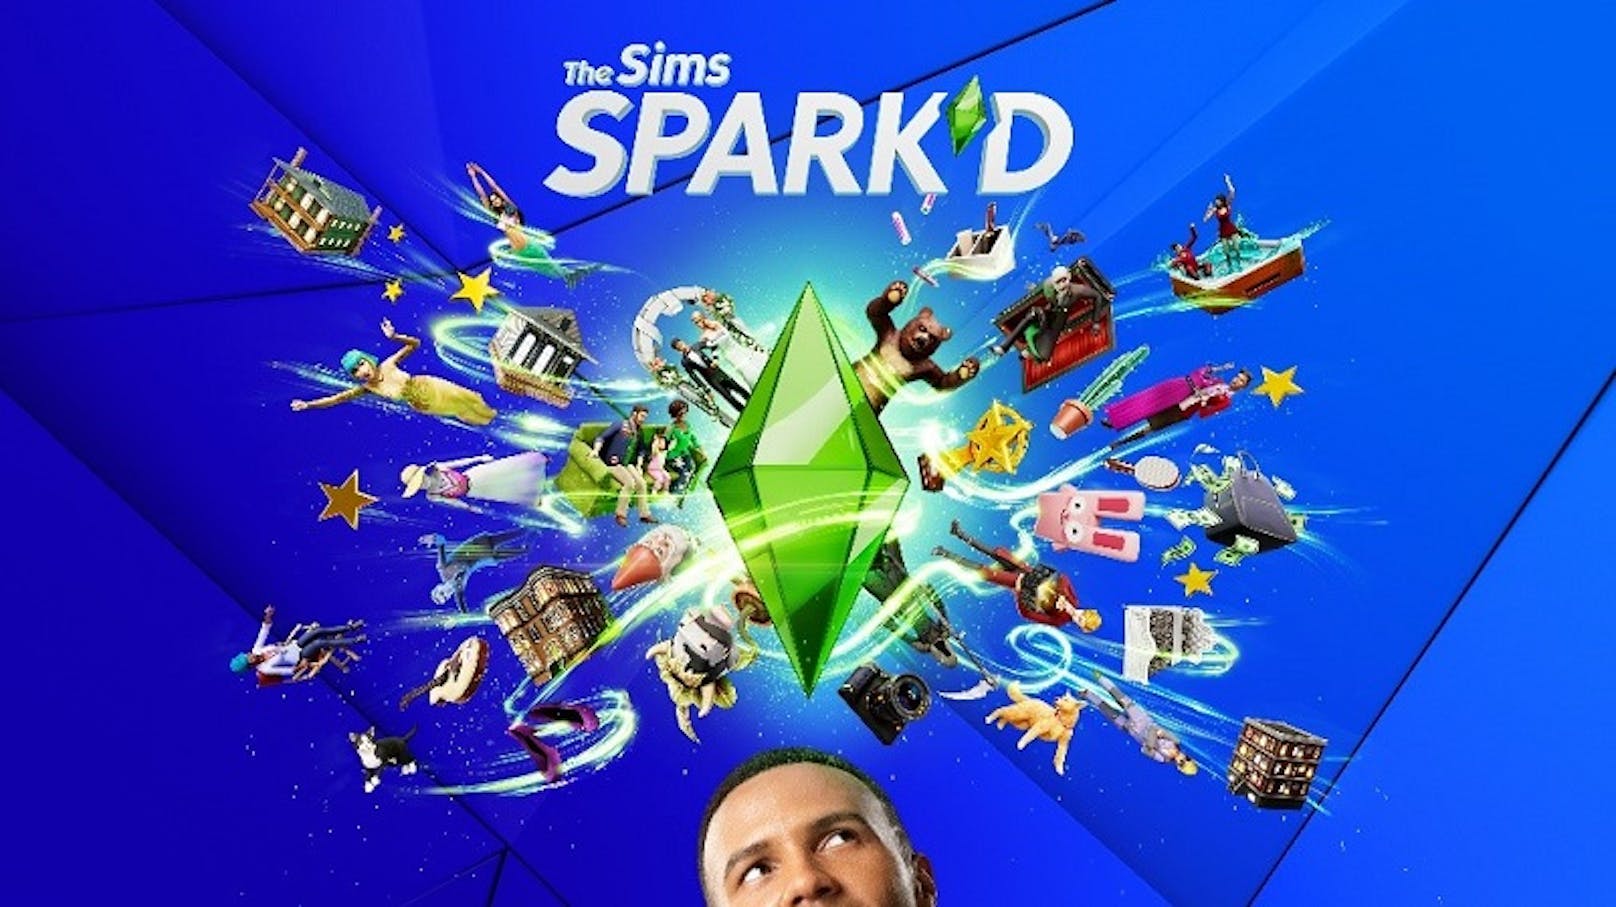 EA kündigt "Die Sims Spark'd" als Reality-TV-Format an